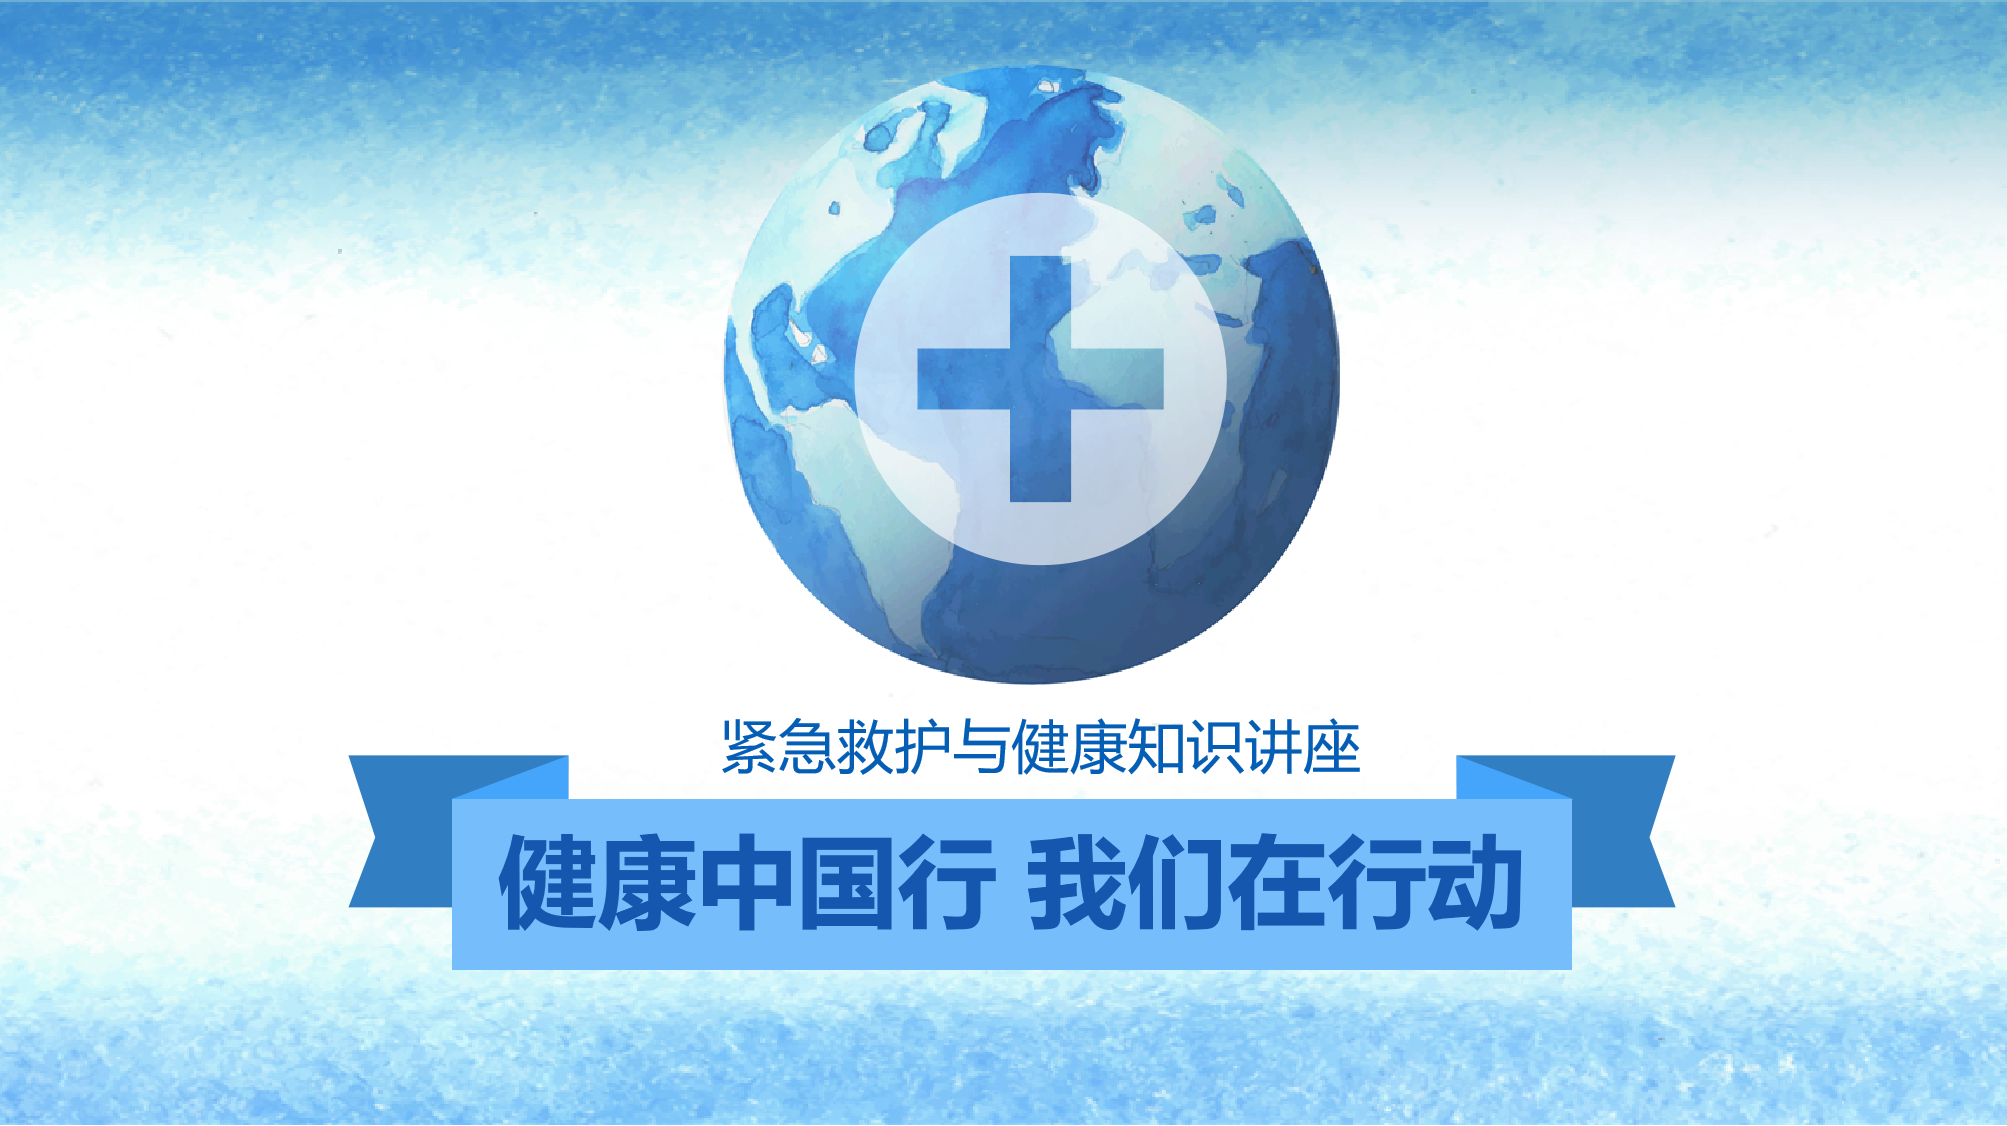 Huaian Jihongte company emergency rescue and health knowledge training